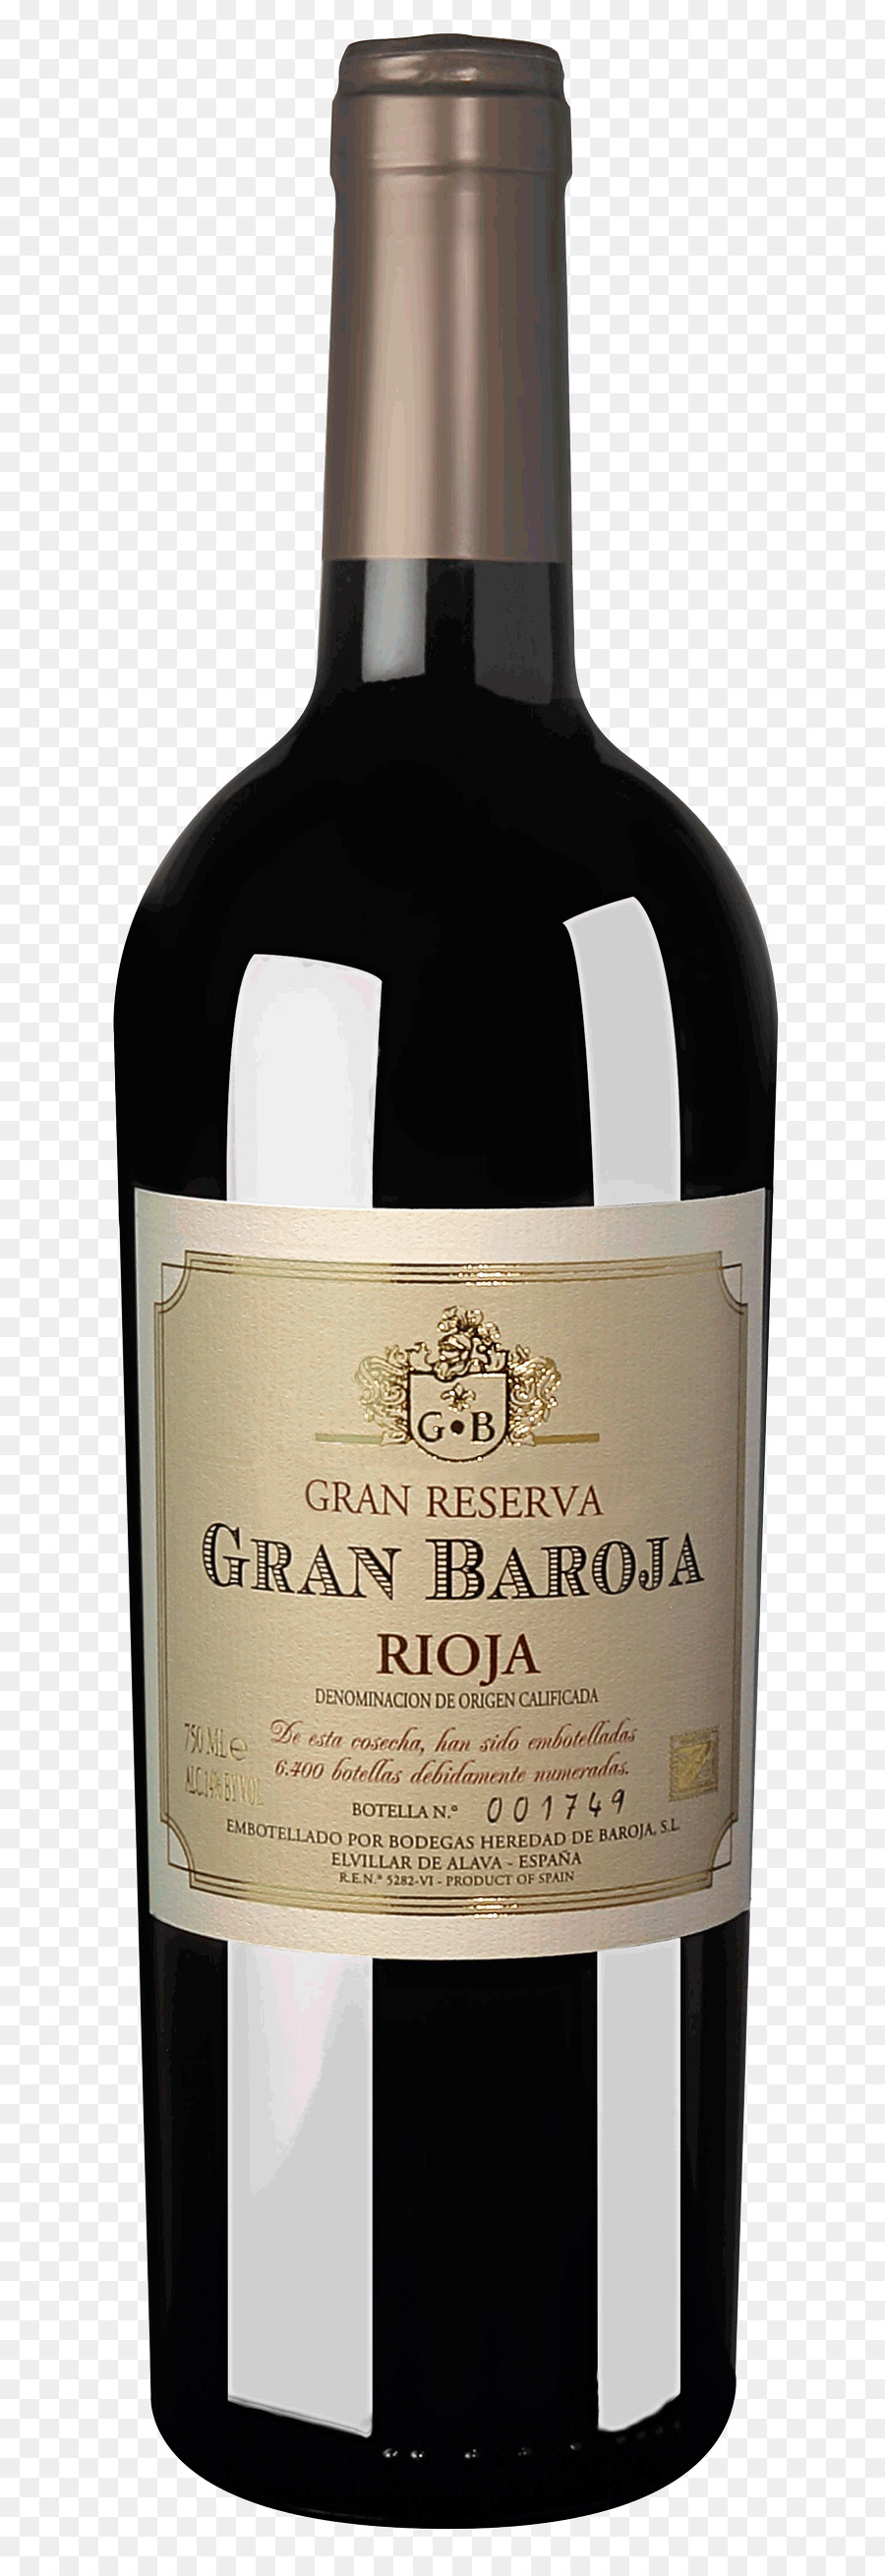 Heredad دي Baroja，النبيذ الحلوى PNG